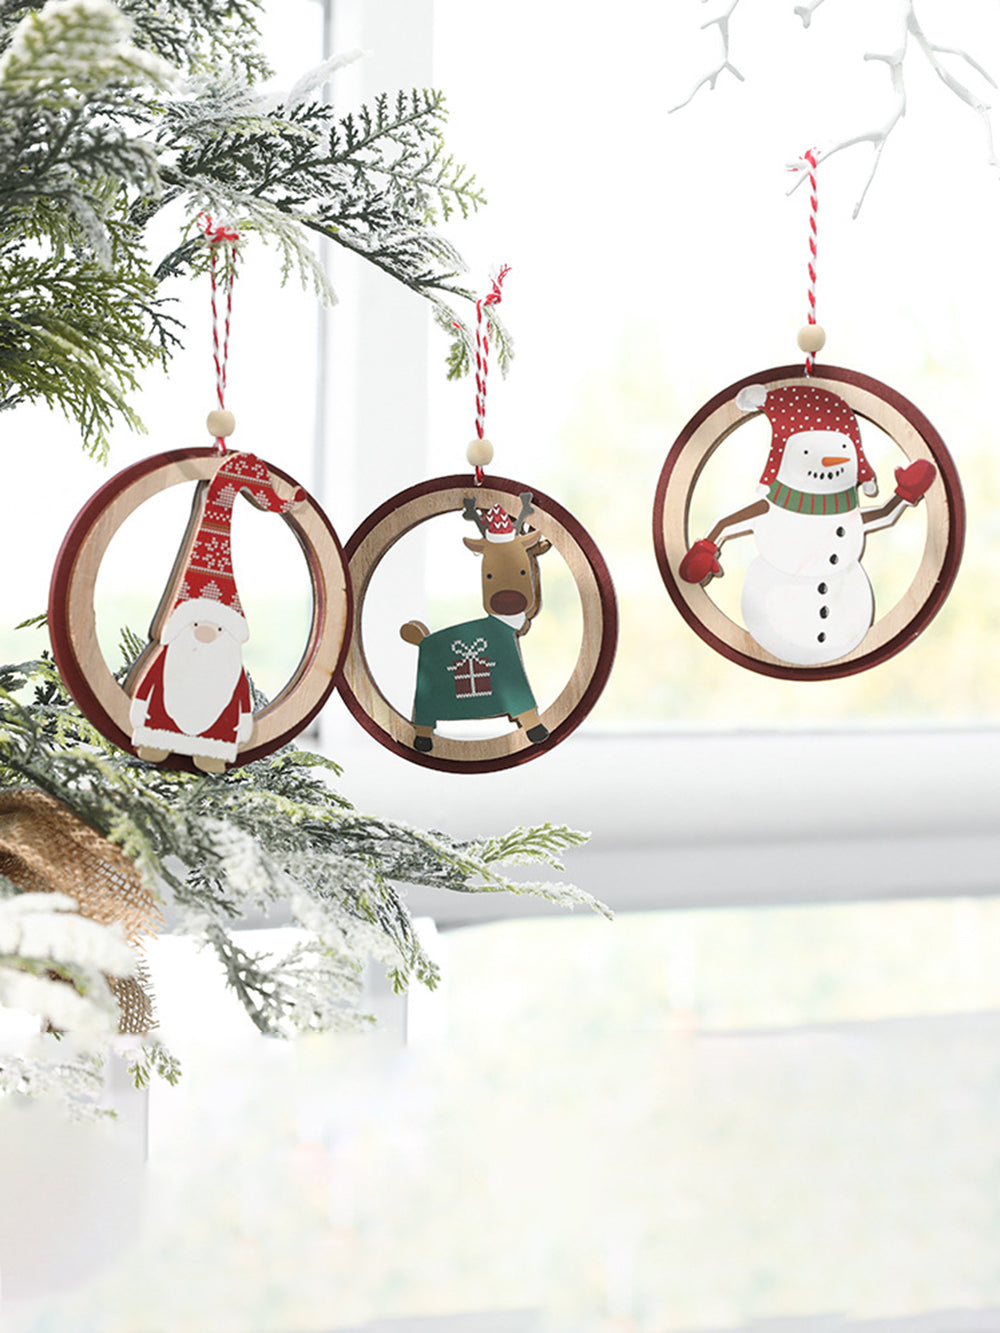 Santa Claus Snowman Holz faarweg Ornament